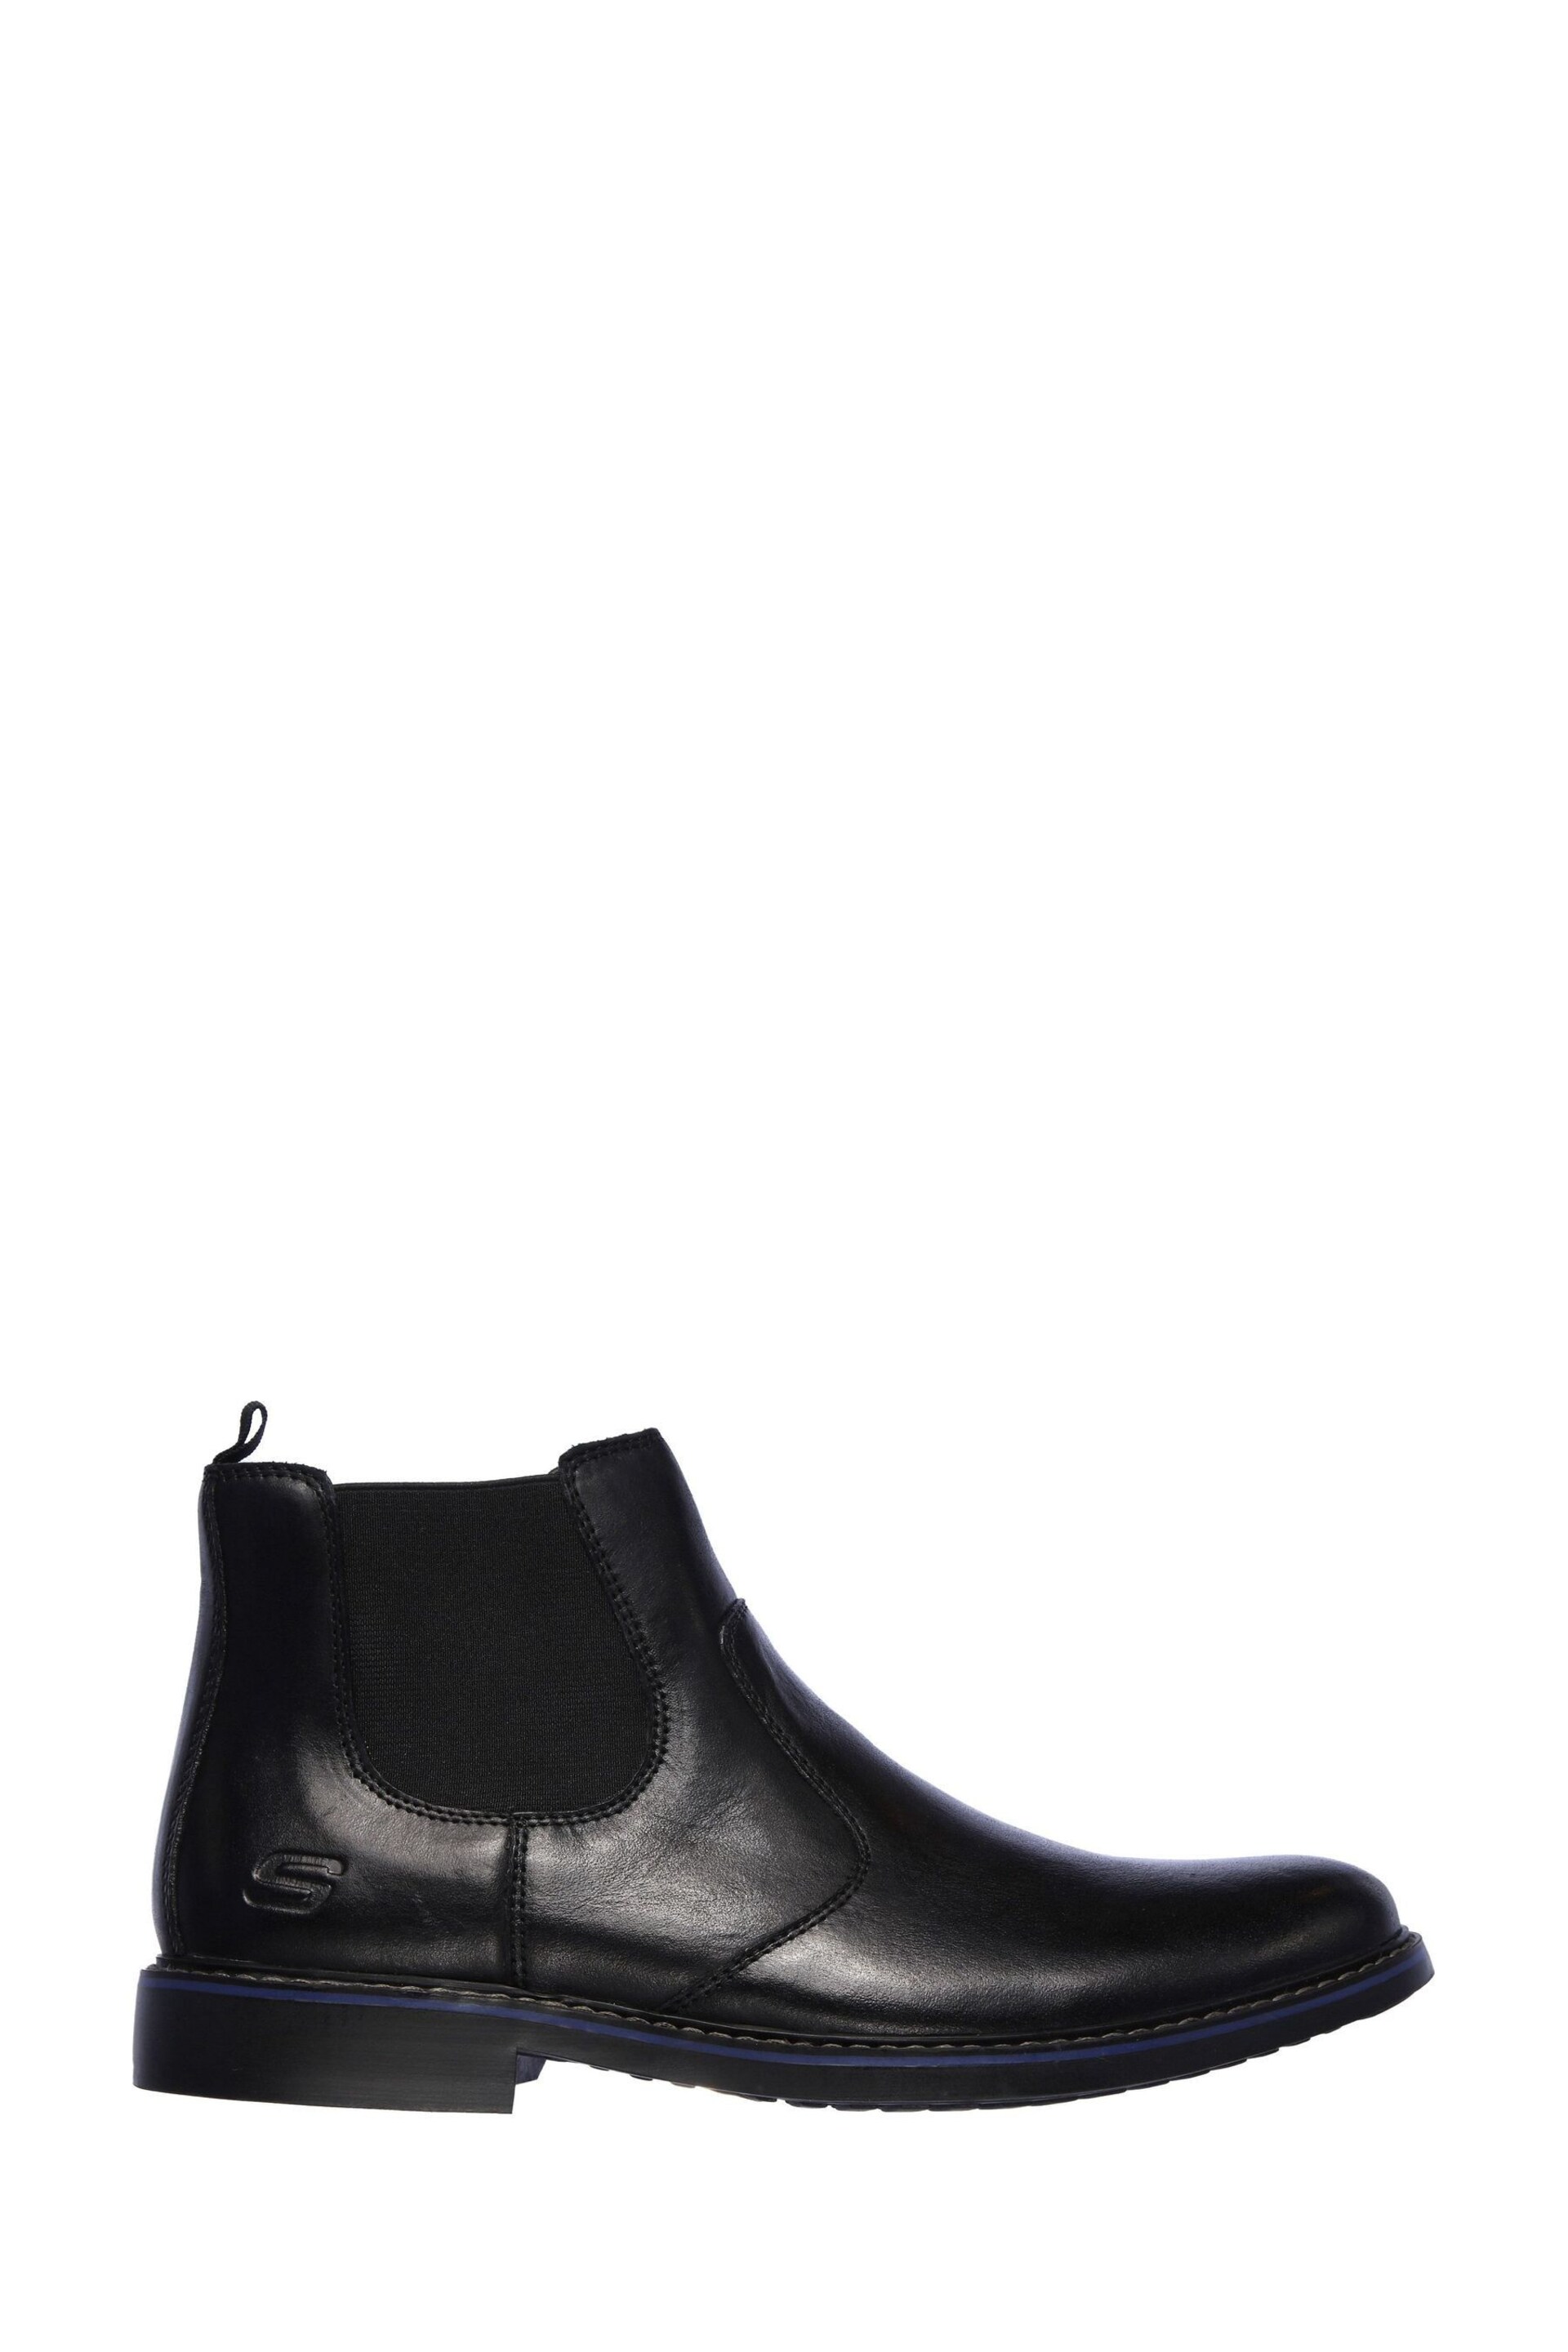 Skechers Black Bregman Morago Mens Boots - Image 1 of 5